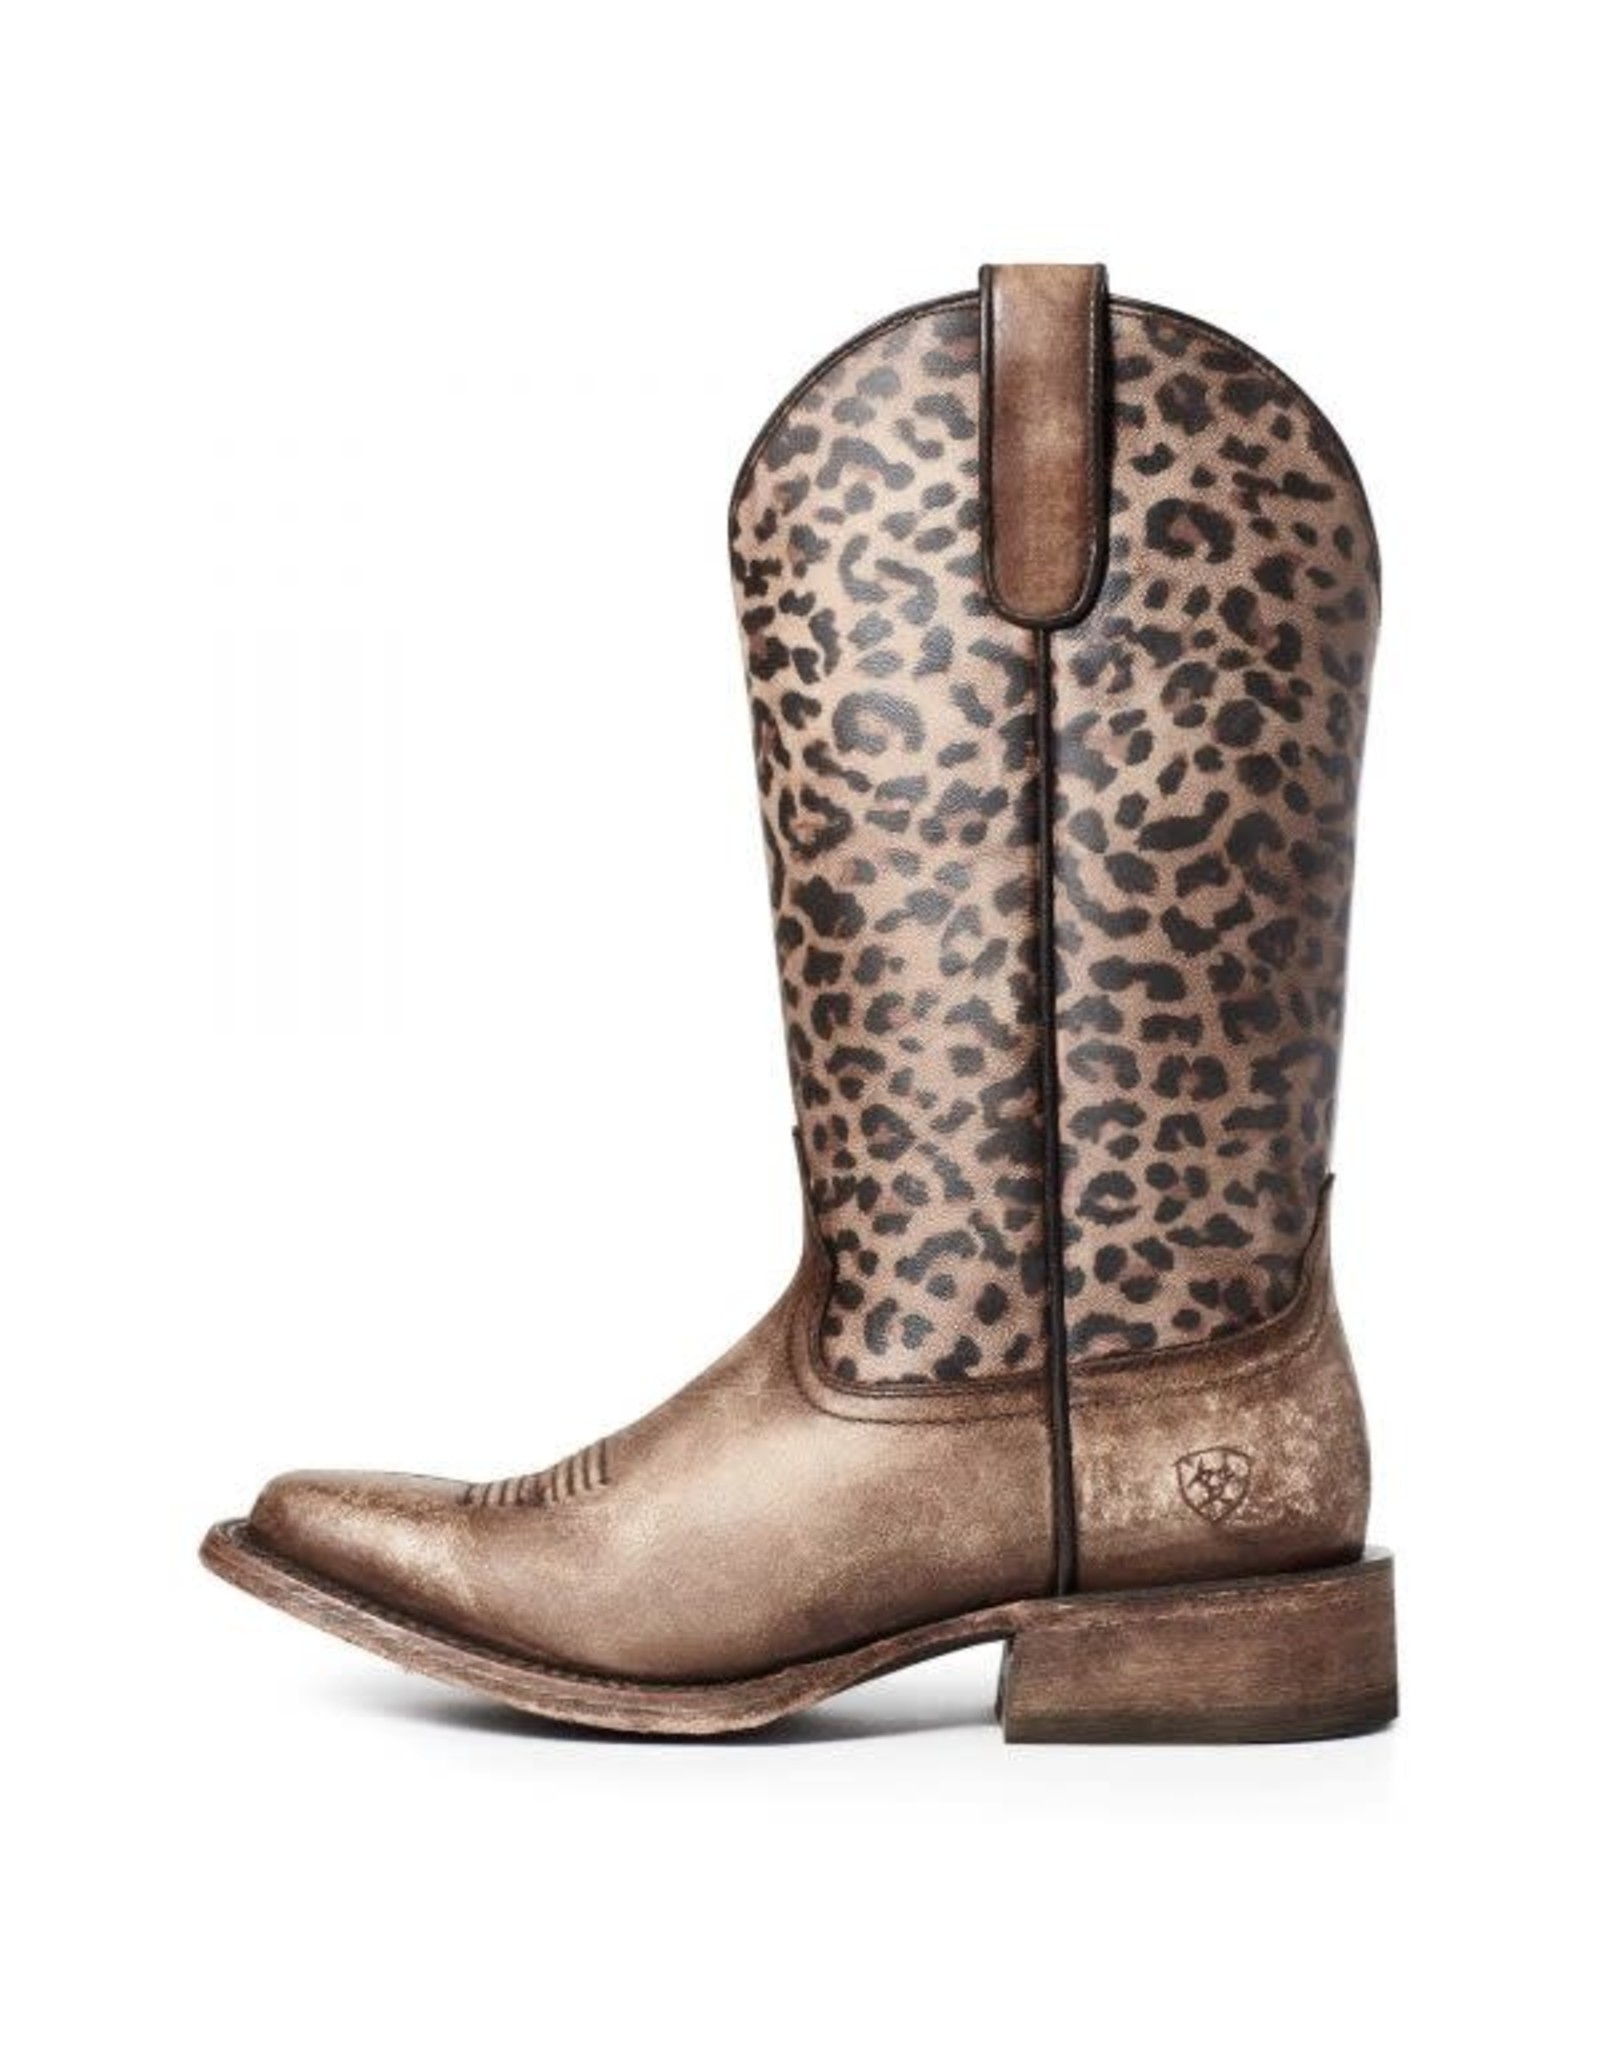 Ariat Ladies Circuit Savanna Cheetah 10035942 Western Boots